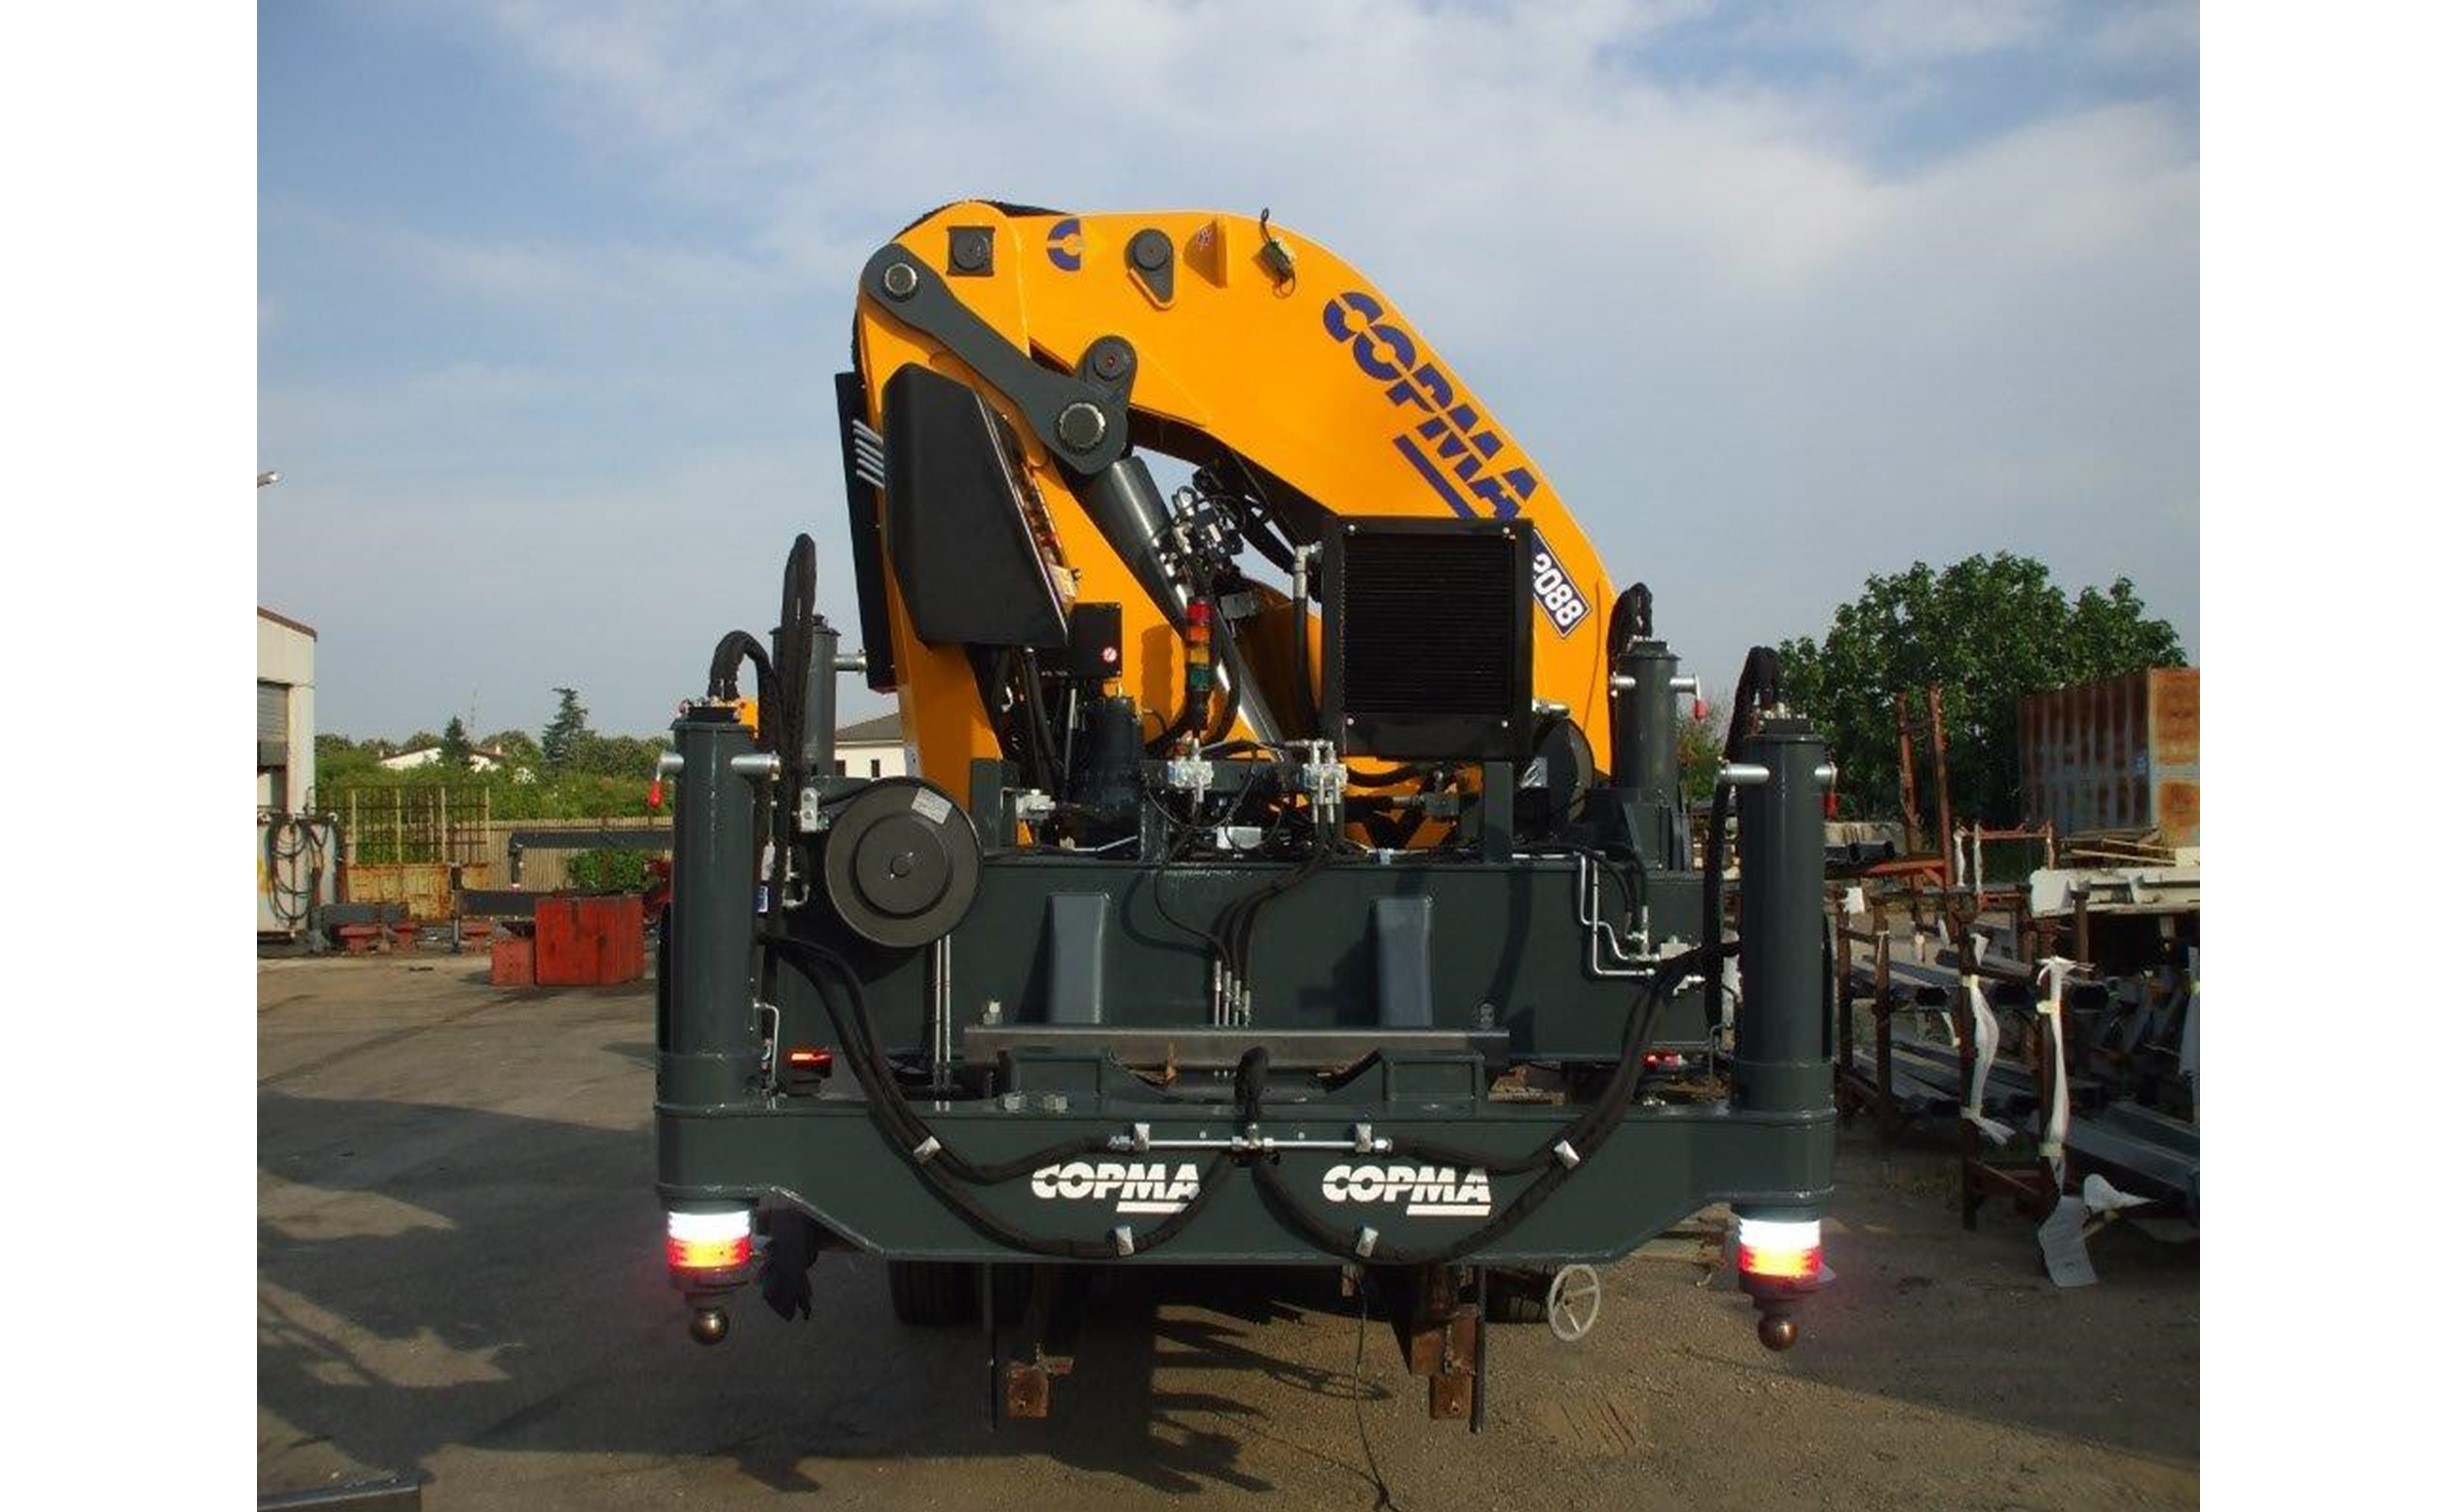 Copma hydraulic truck-mounted crane Model nos.: 1150.8J6, 1150.10, 2000.9, 820.8, 950.9, 510.8, 650.8, 510.6, 650.6